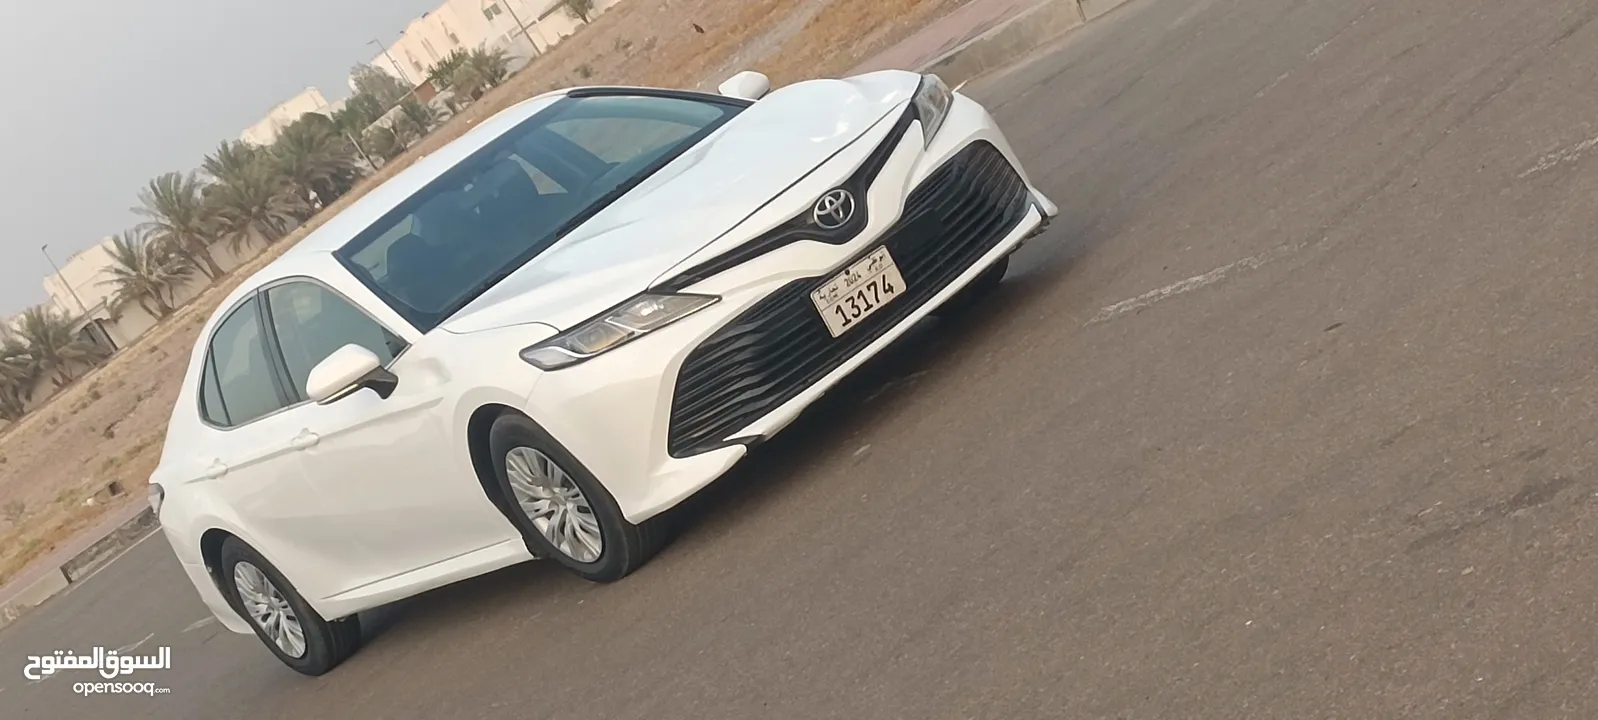 Toyota Camry model 2018 GCC rear camera